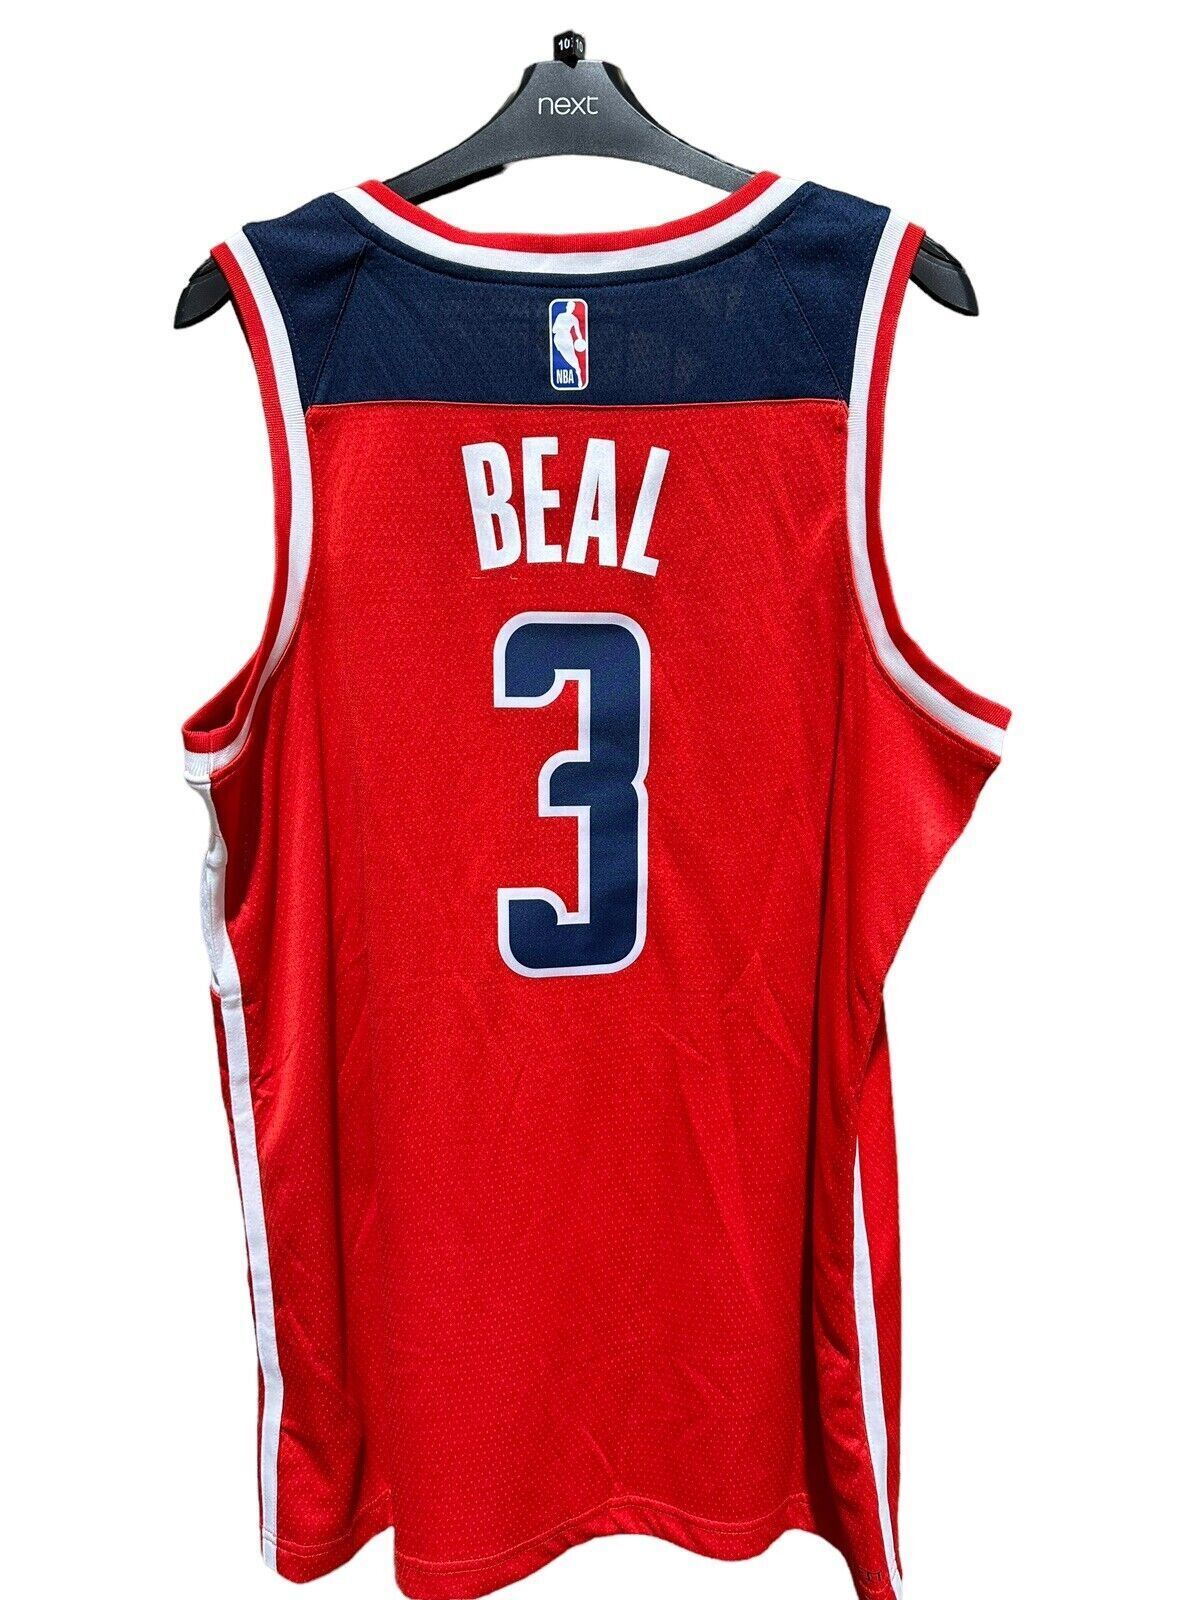 Nike NBA Washington Wizards Swingman Jersey BEAL 3 Basketball Mens Medium